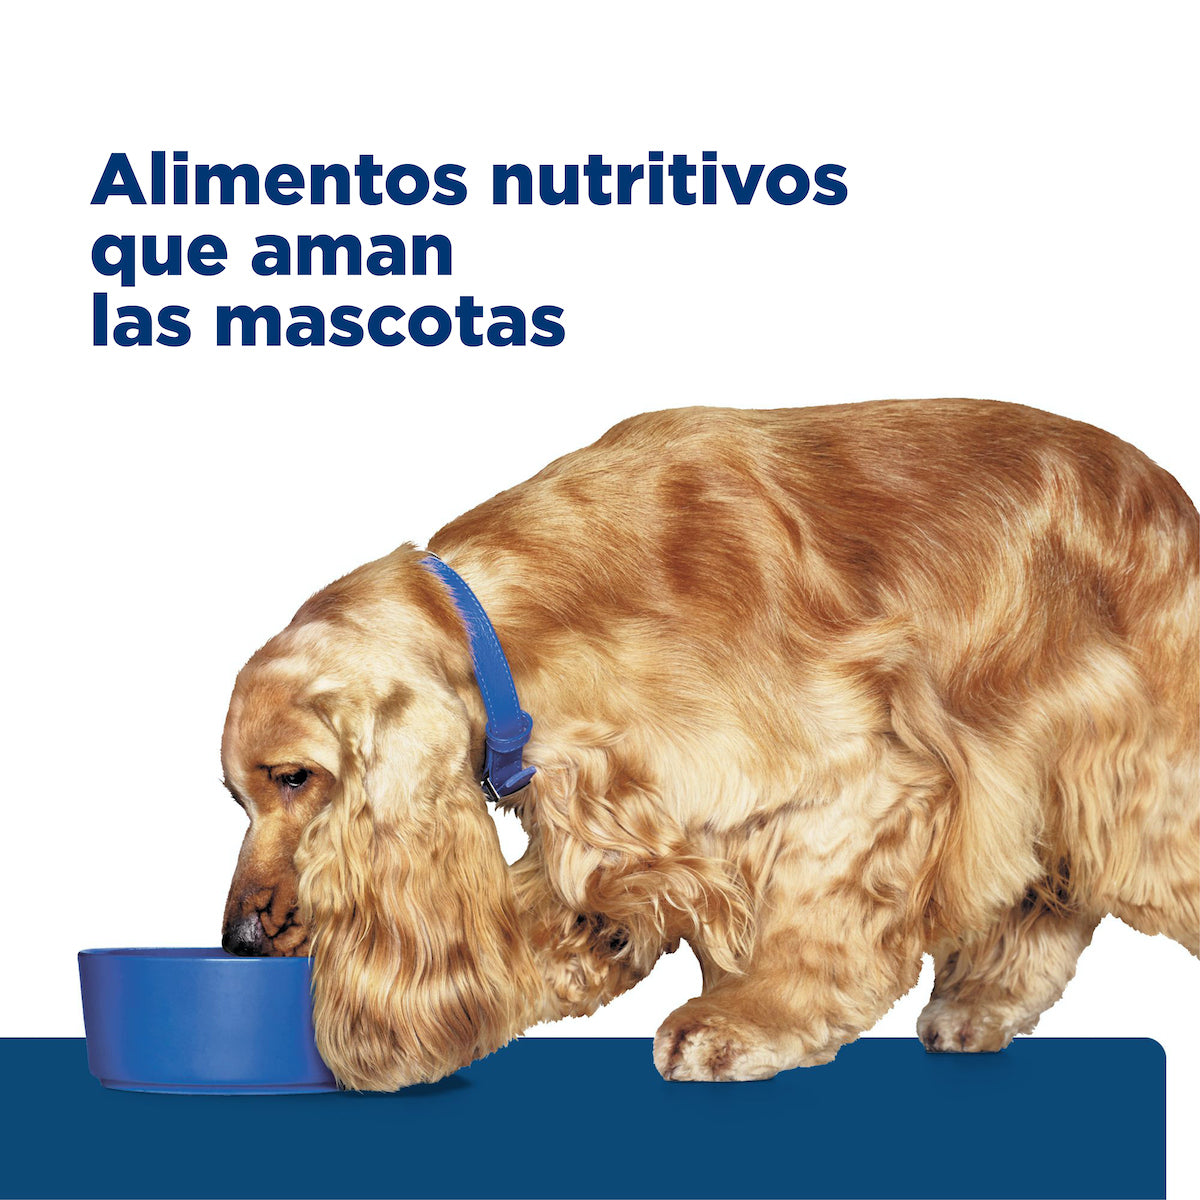 Alimento Húmedo en Lata para Perro Adulto z/d Ultra Hill's Prescription Diet 370 g (Individual)